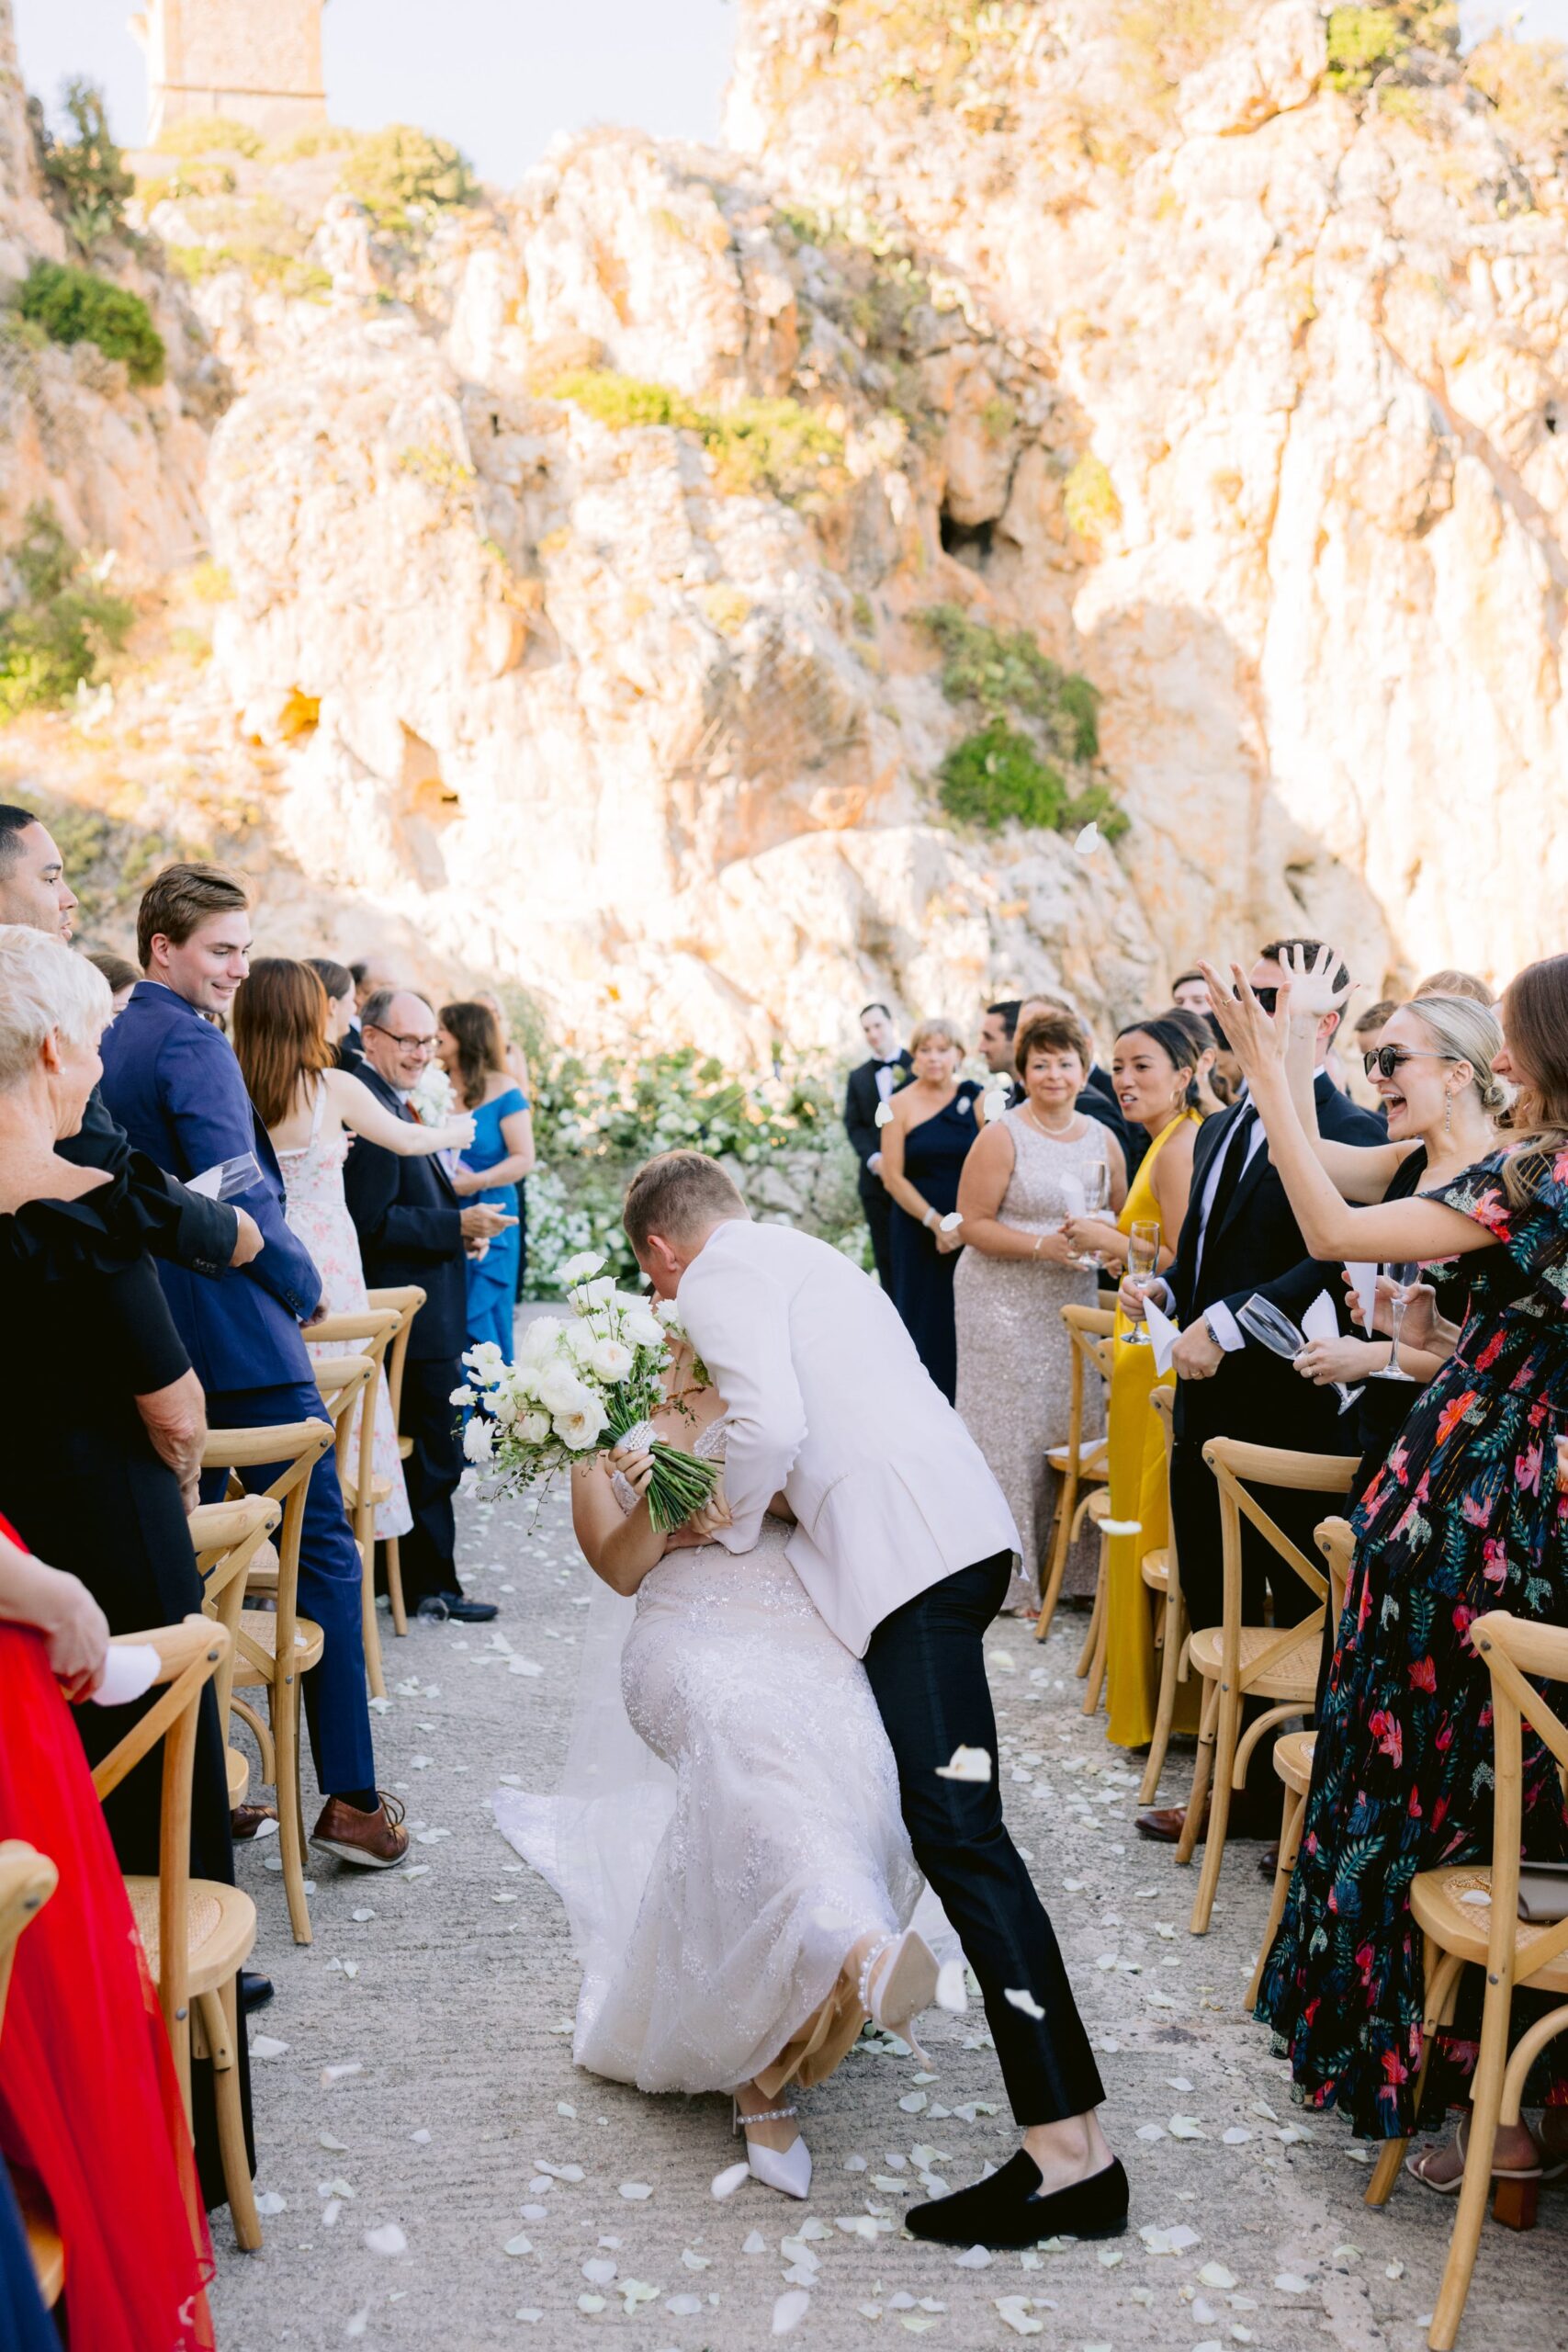 Destination Wedding in Italy - Modern Black-Tie Wedding with Coastal Views - Laura Bravi Events - Larisa Shorina Photography 